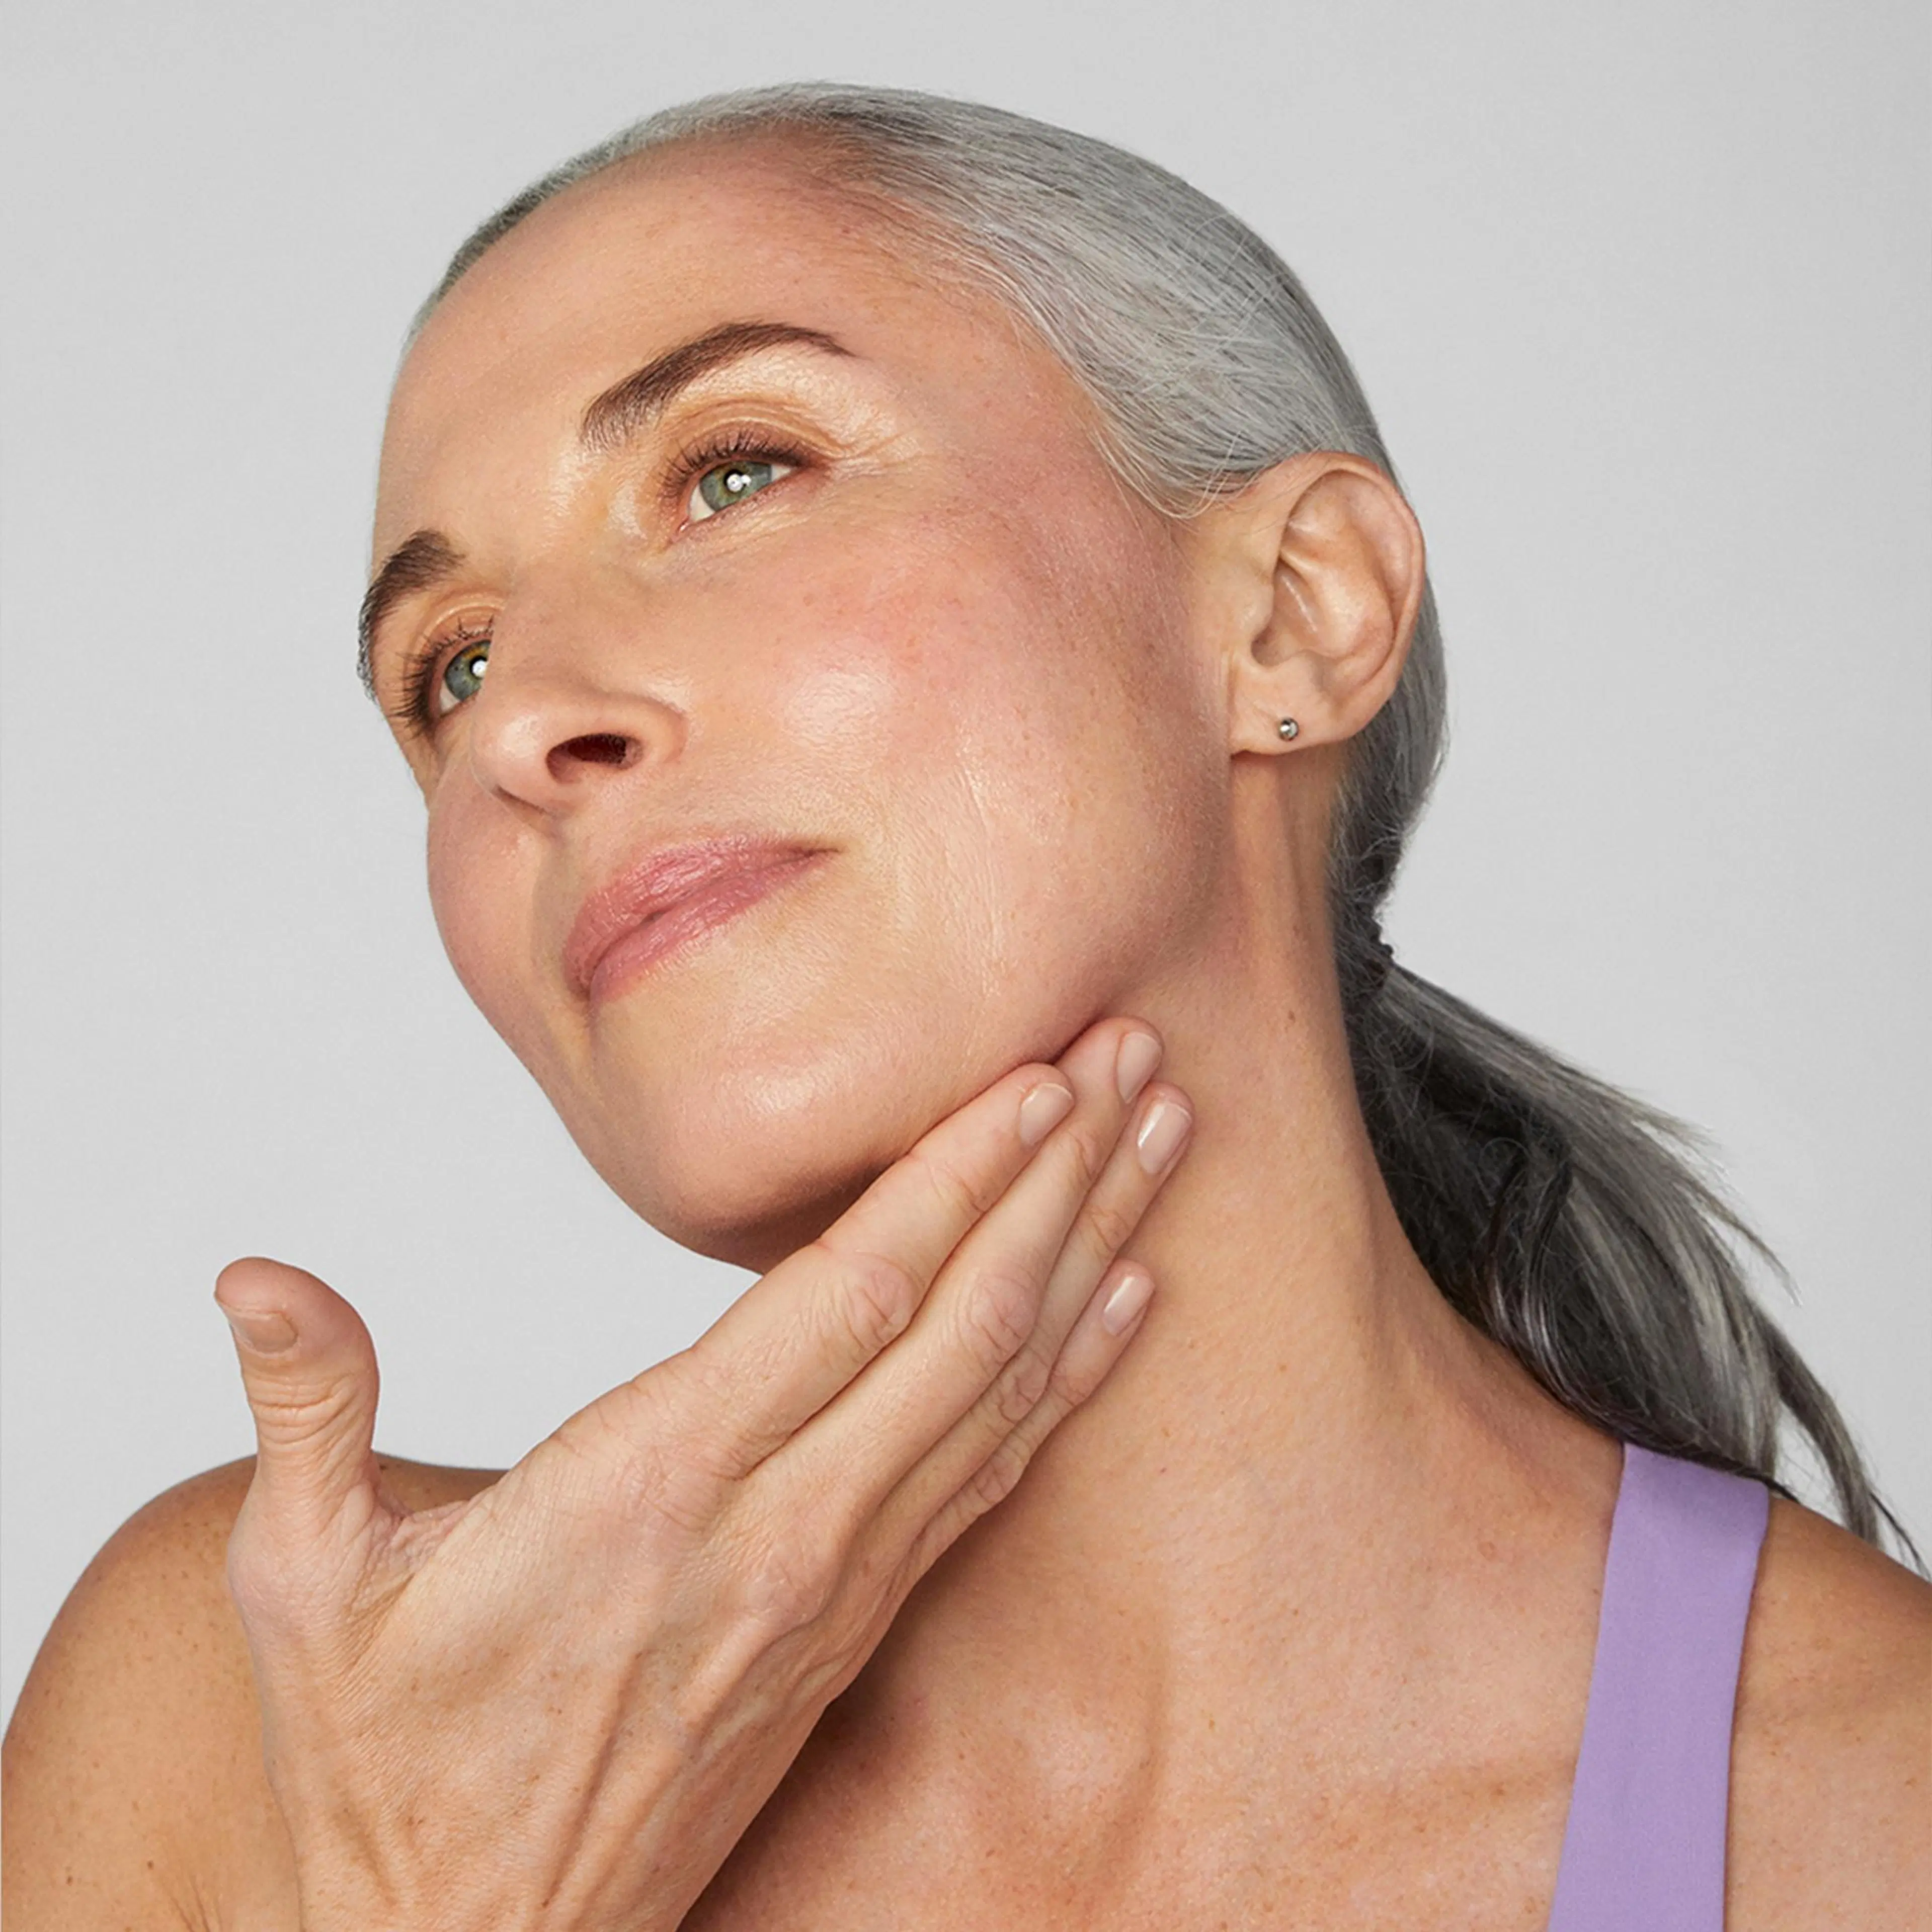 Clinique Smart Clinical Repair Lifting face + neck cream tehovoide 50 ml